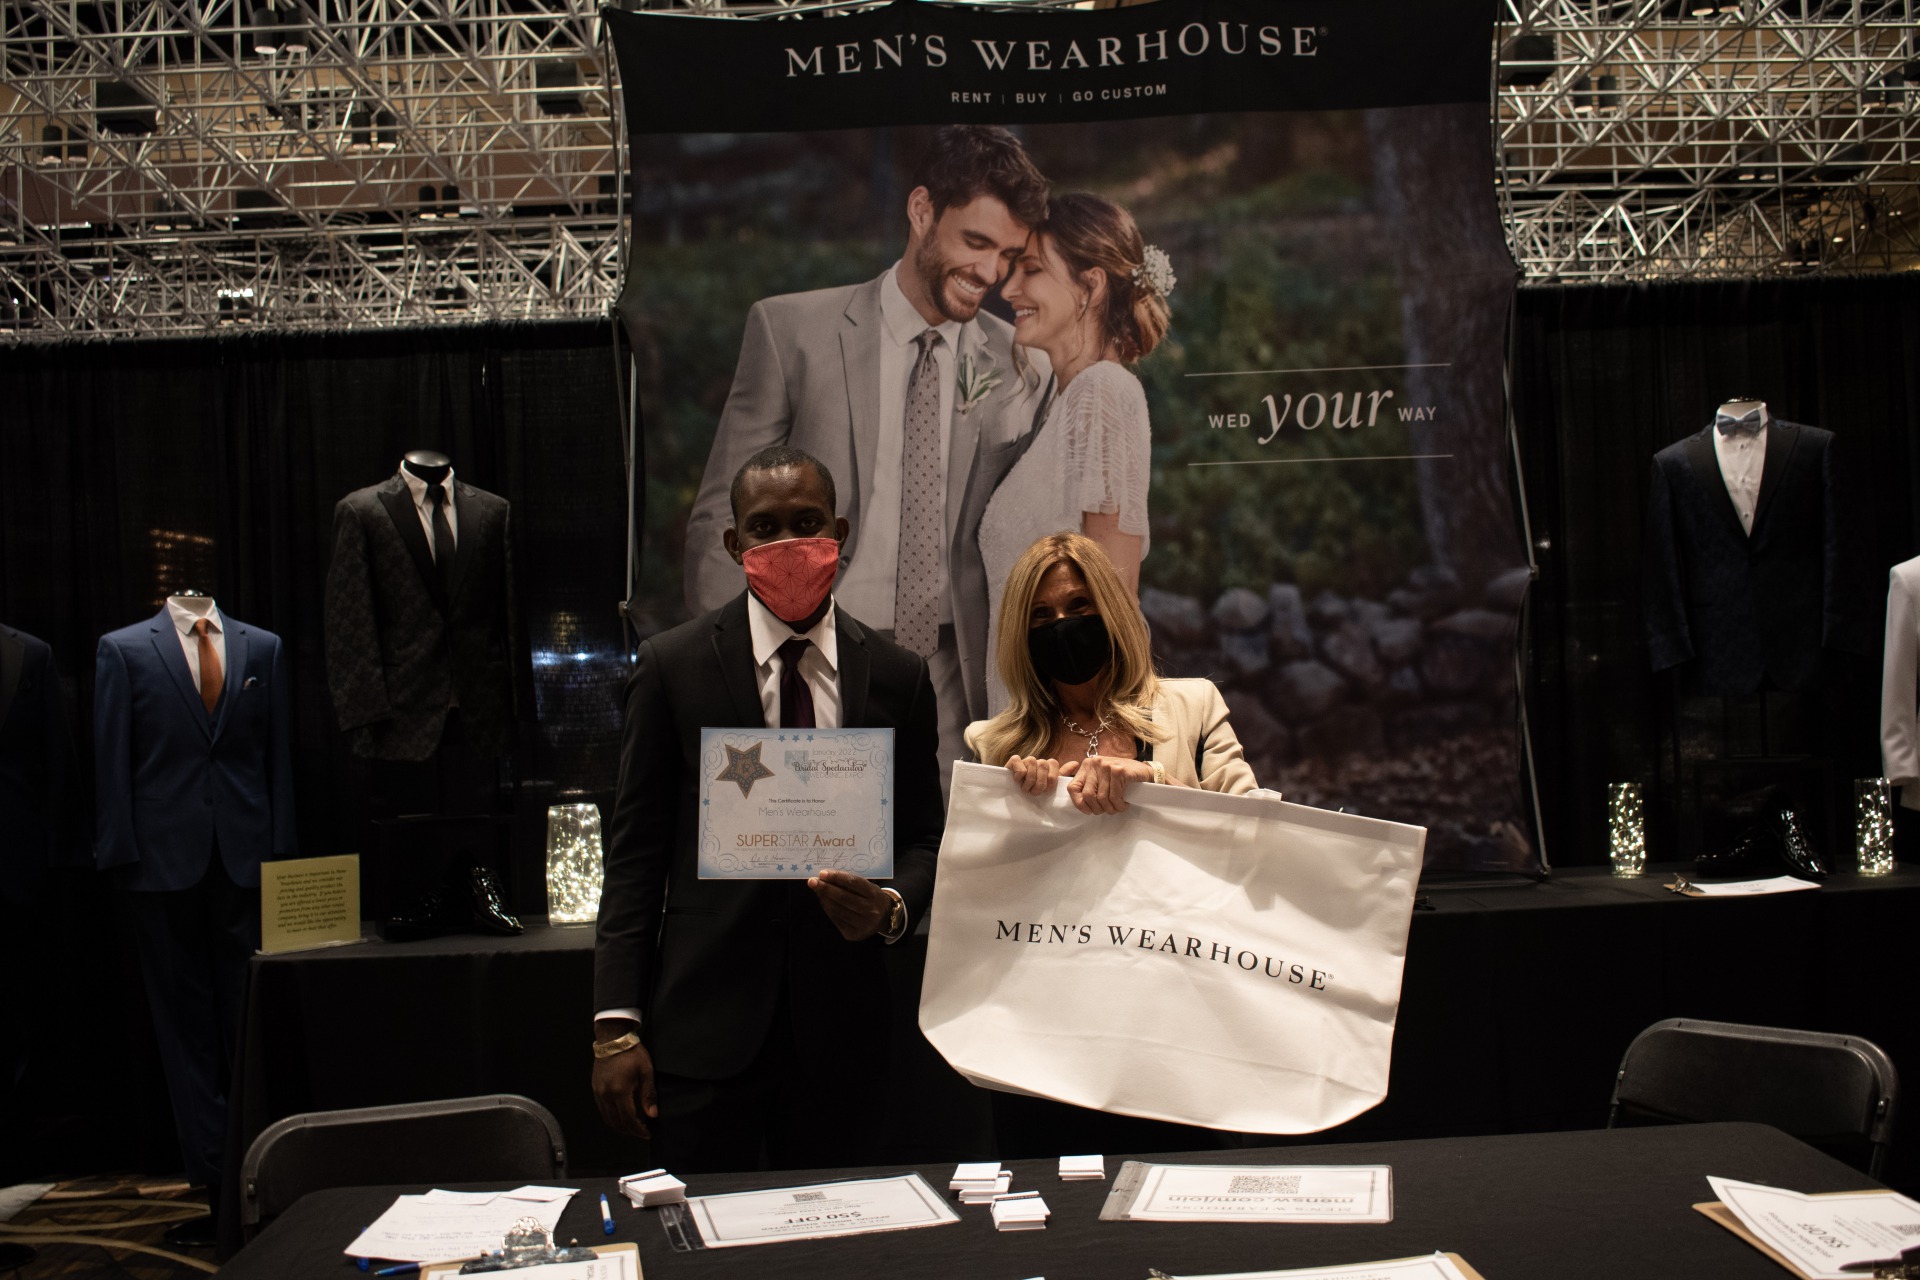 The Men's Wearhouse, Las Vegas Wedding Tuxedo Pros receive star award at Bridal Spectacular